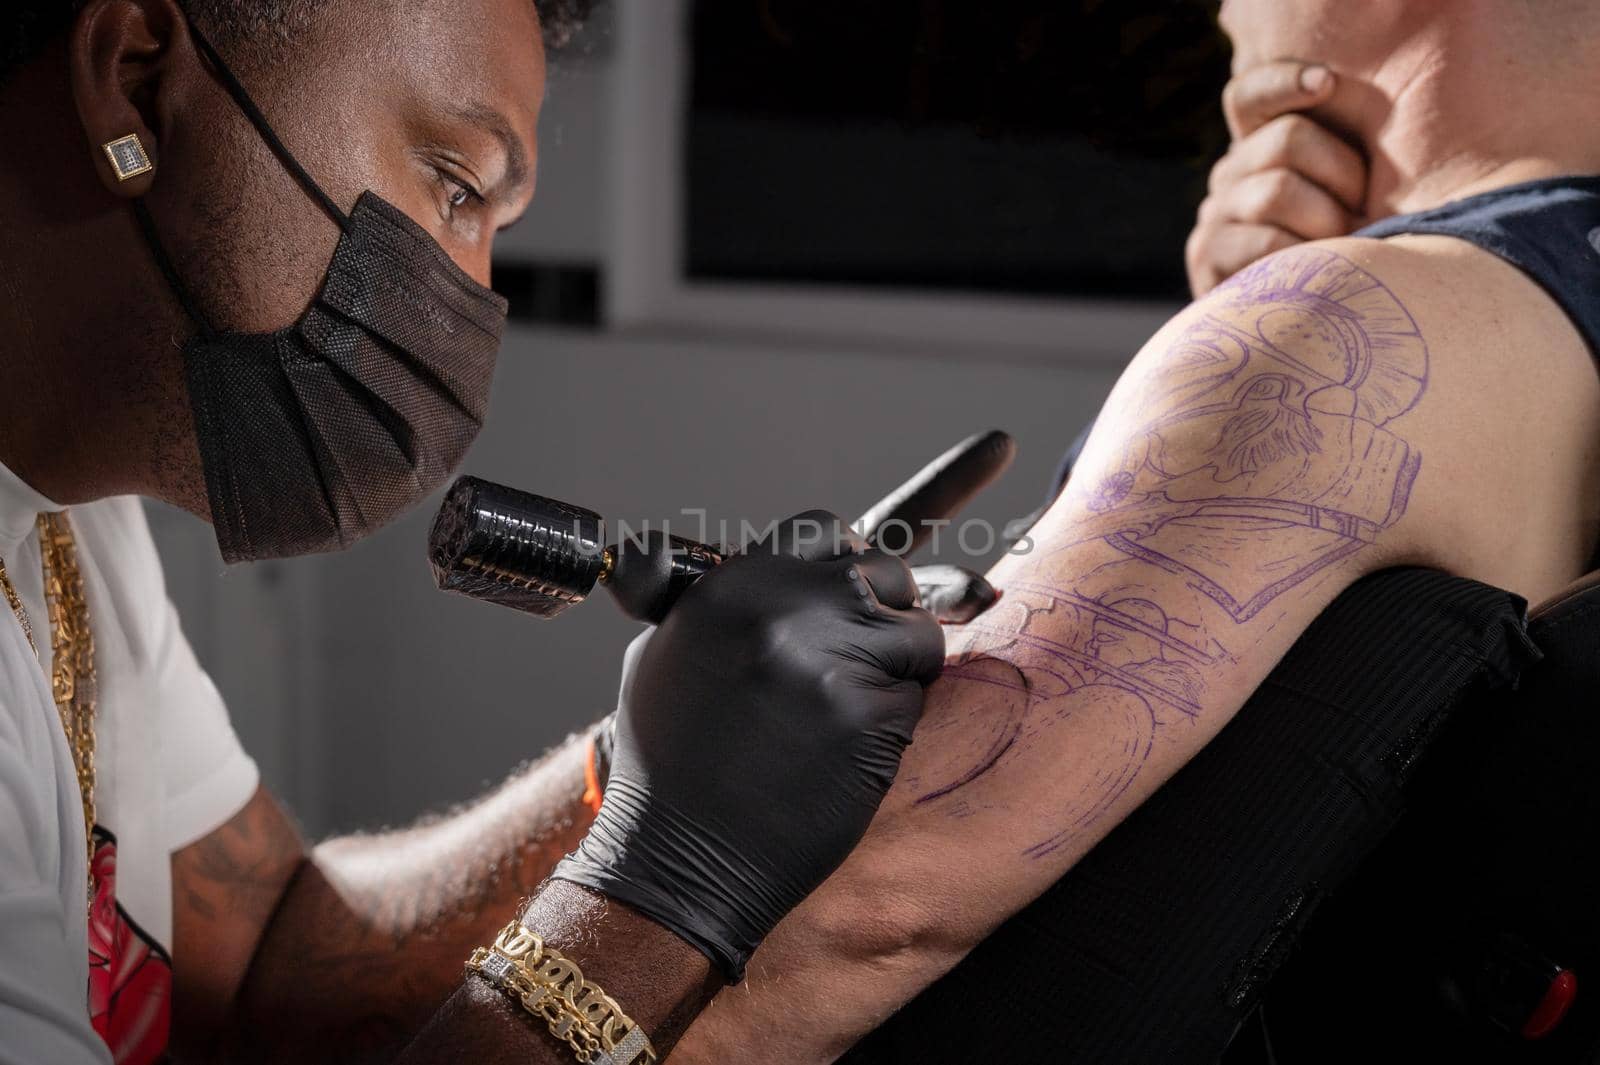 Body art at the tattoo studio by HERRAEZ